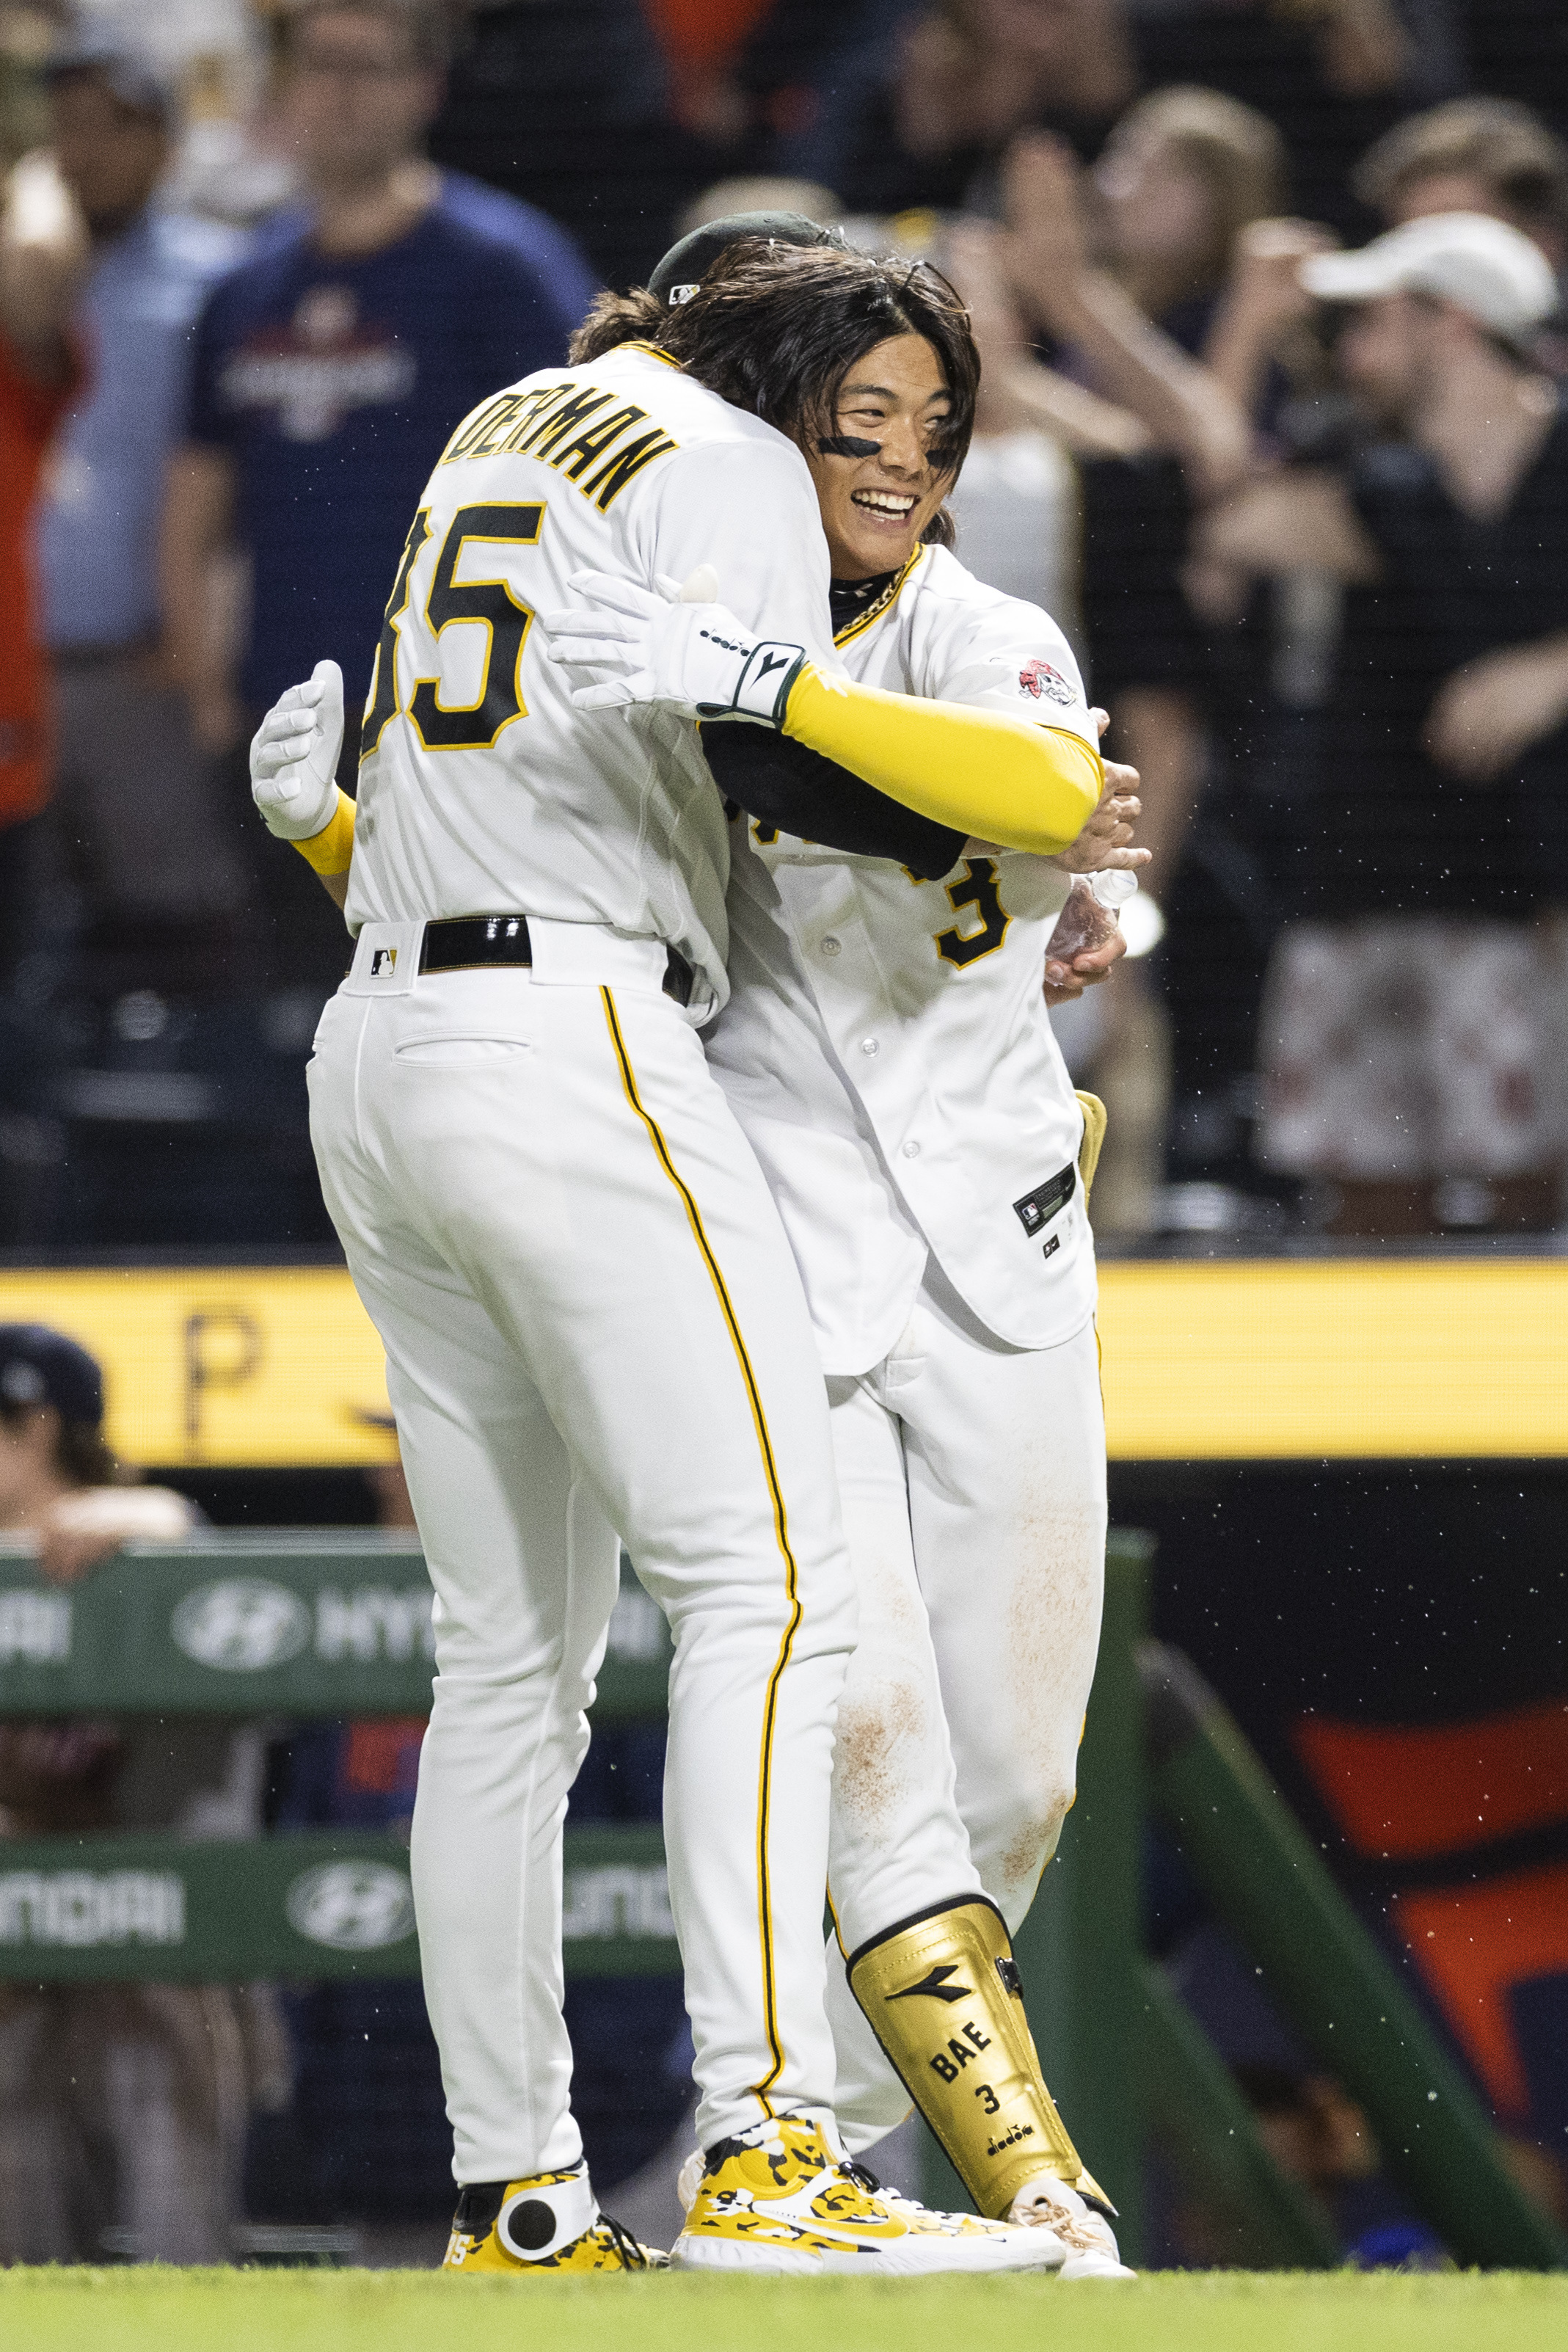 MLB Final Scores: Ji Hwan Bae lifts Pirates to walkoff 7-4 win over Astros  - Bucs Dugout